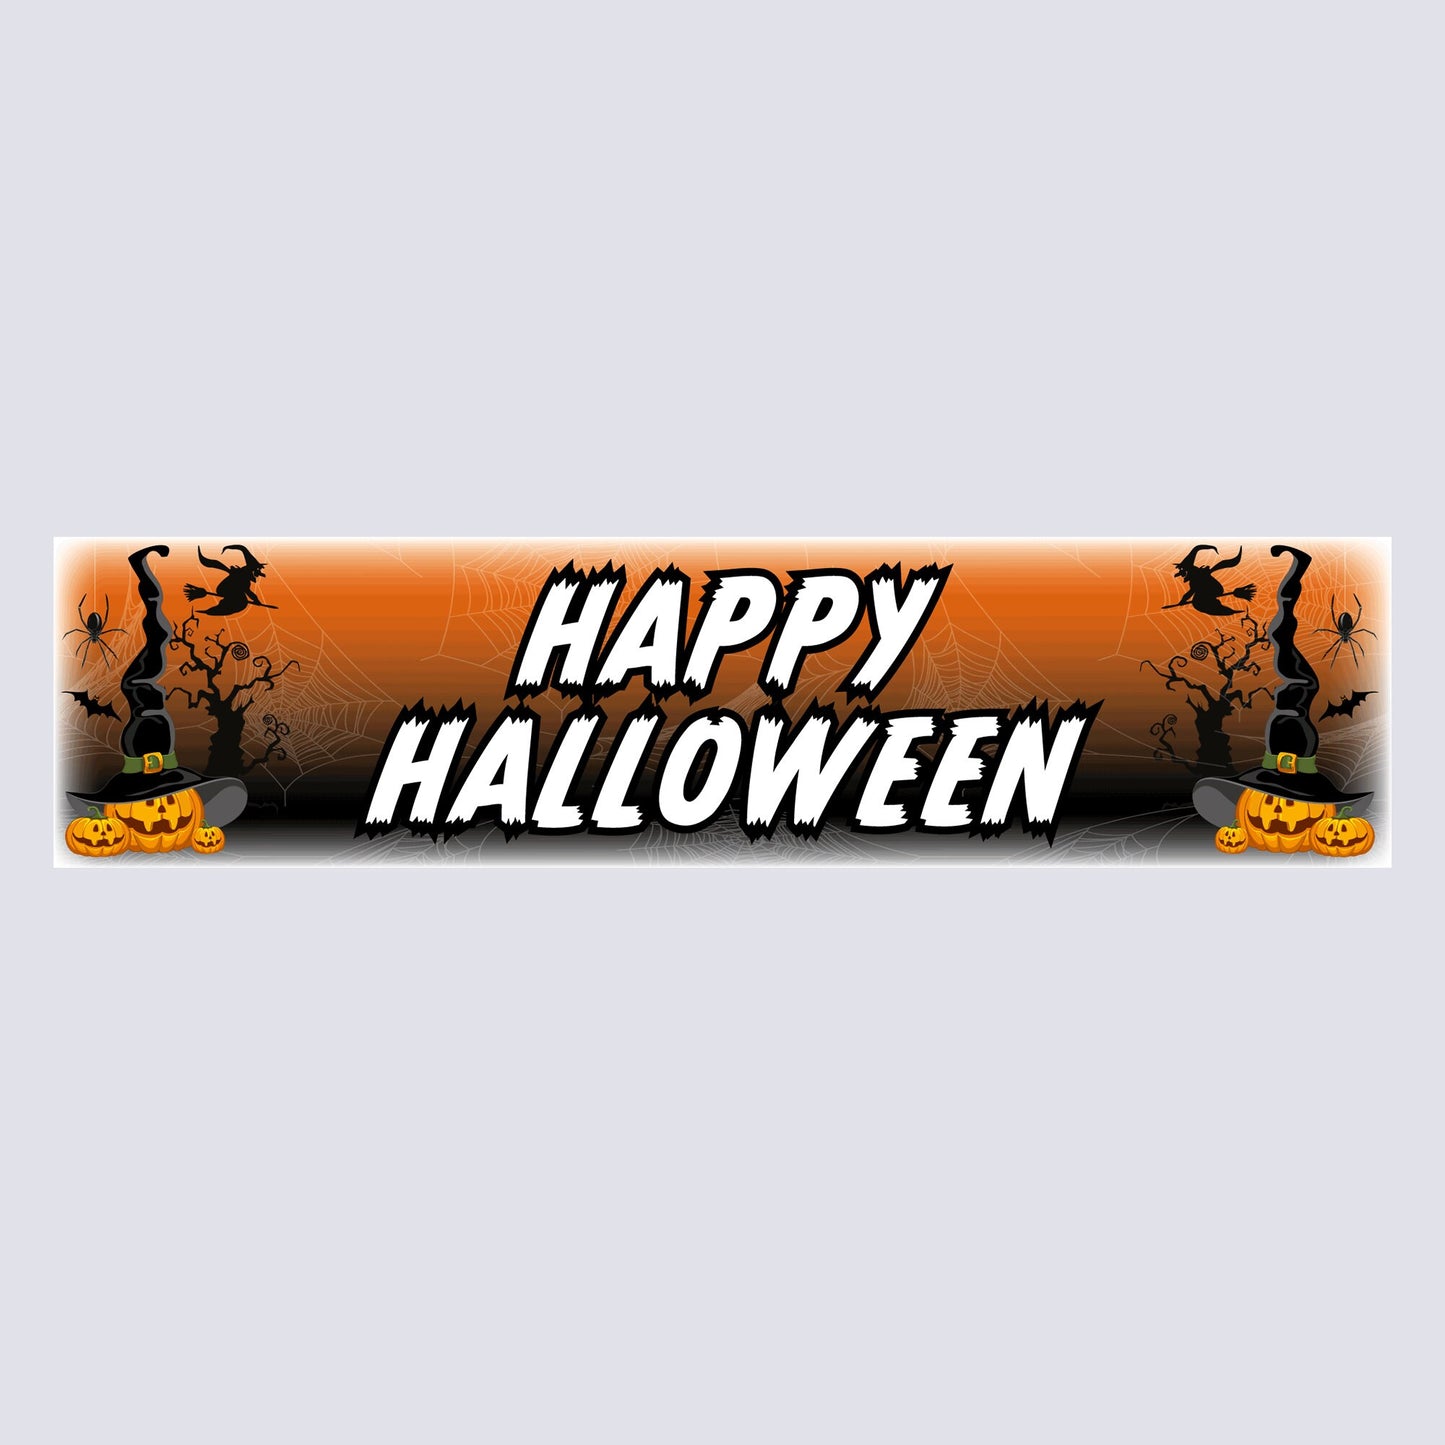 Banner for Halloween - Paper or Vinyl